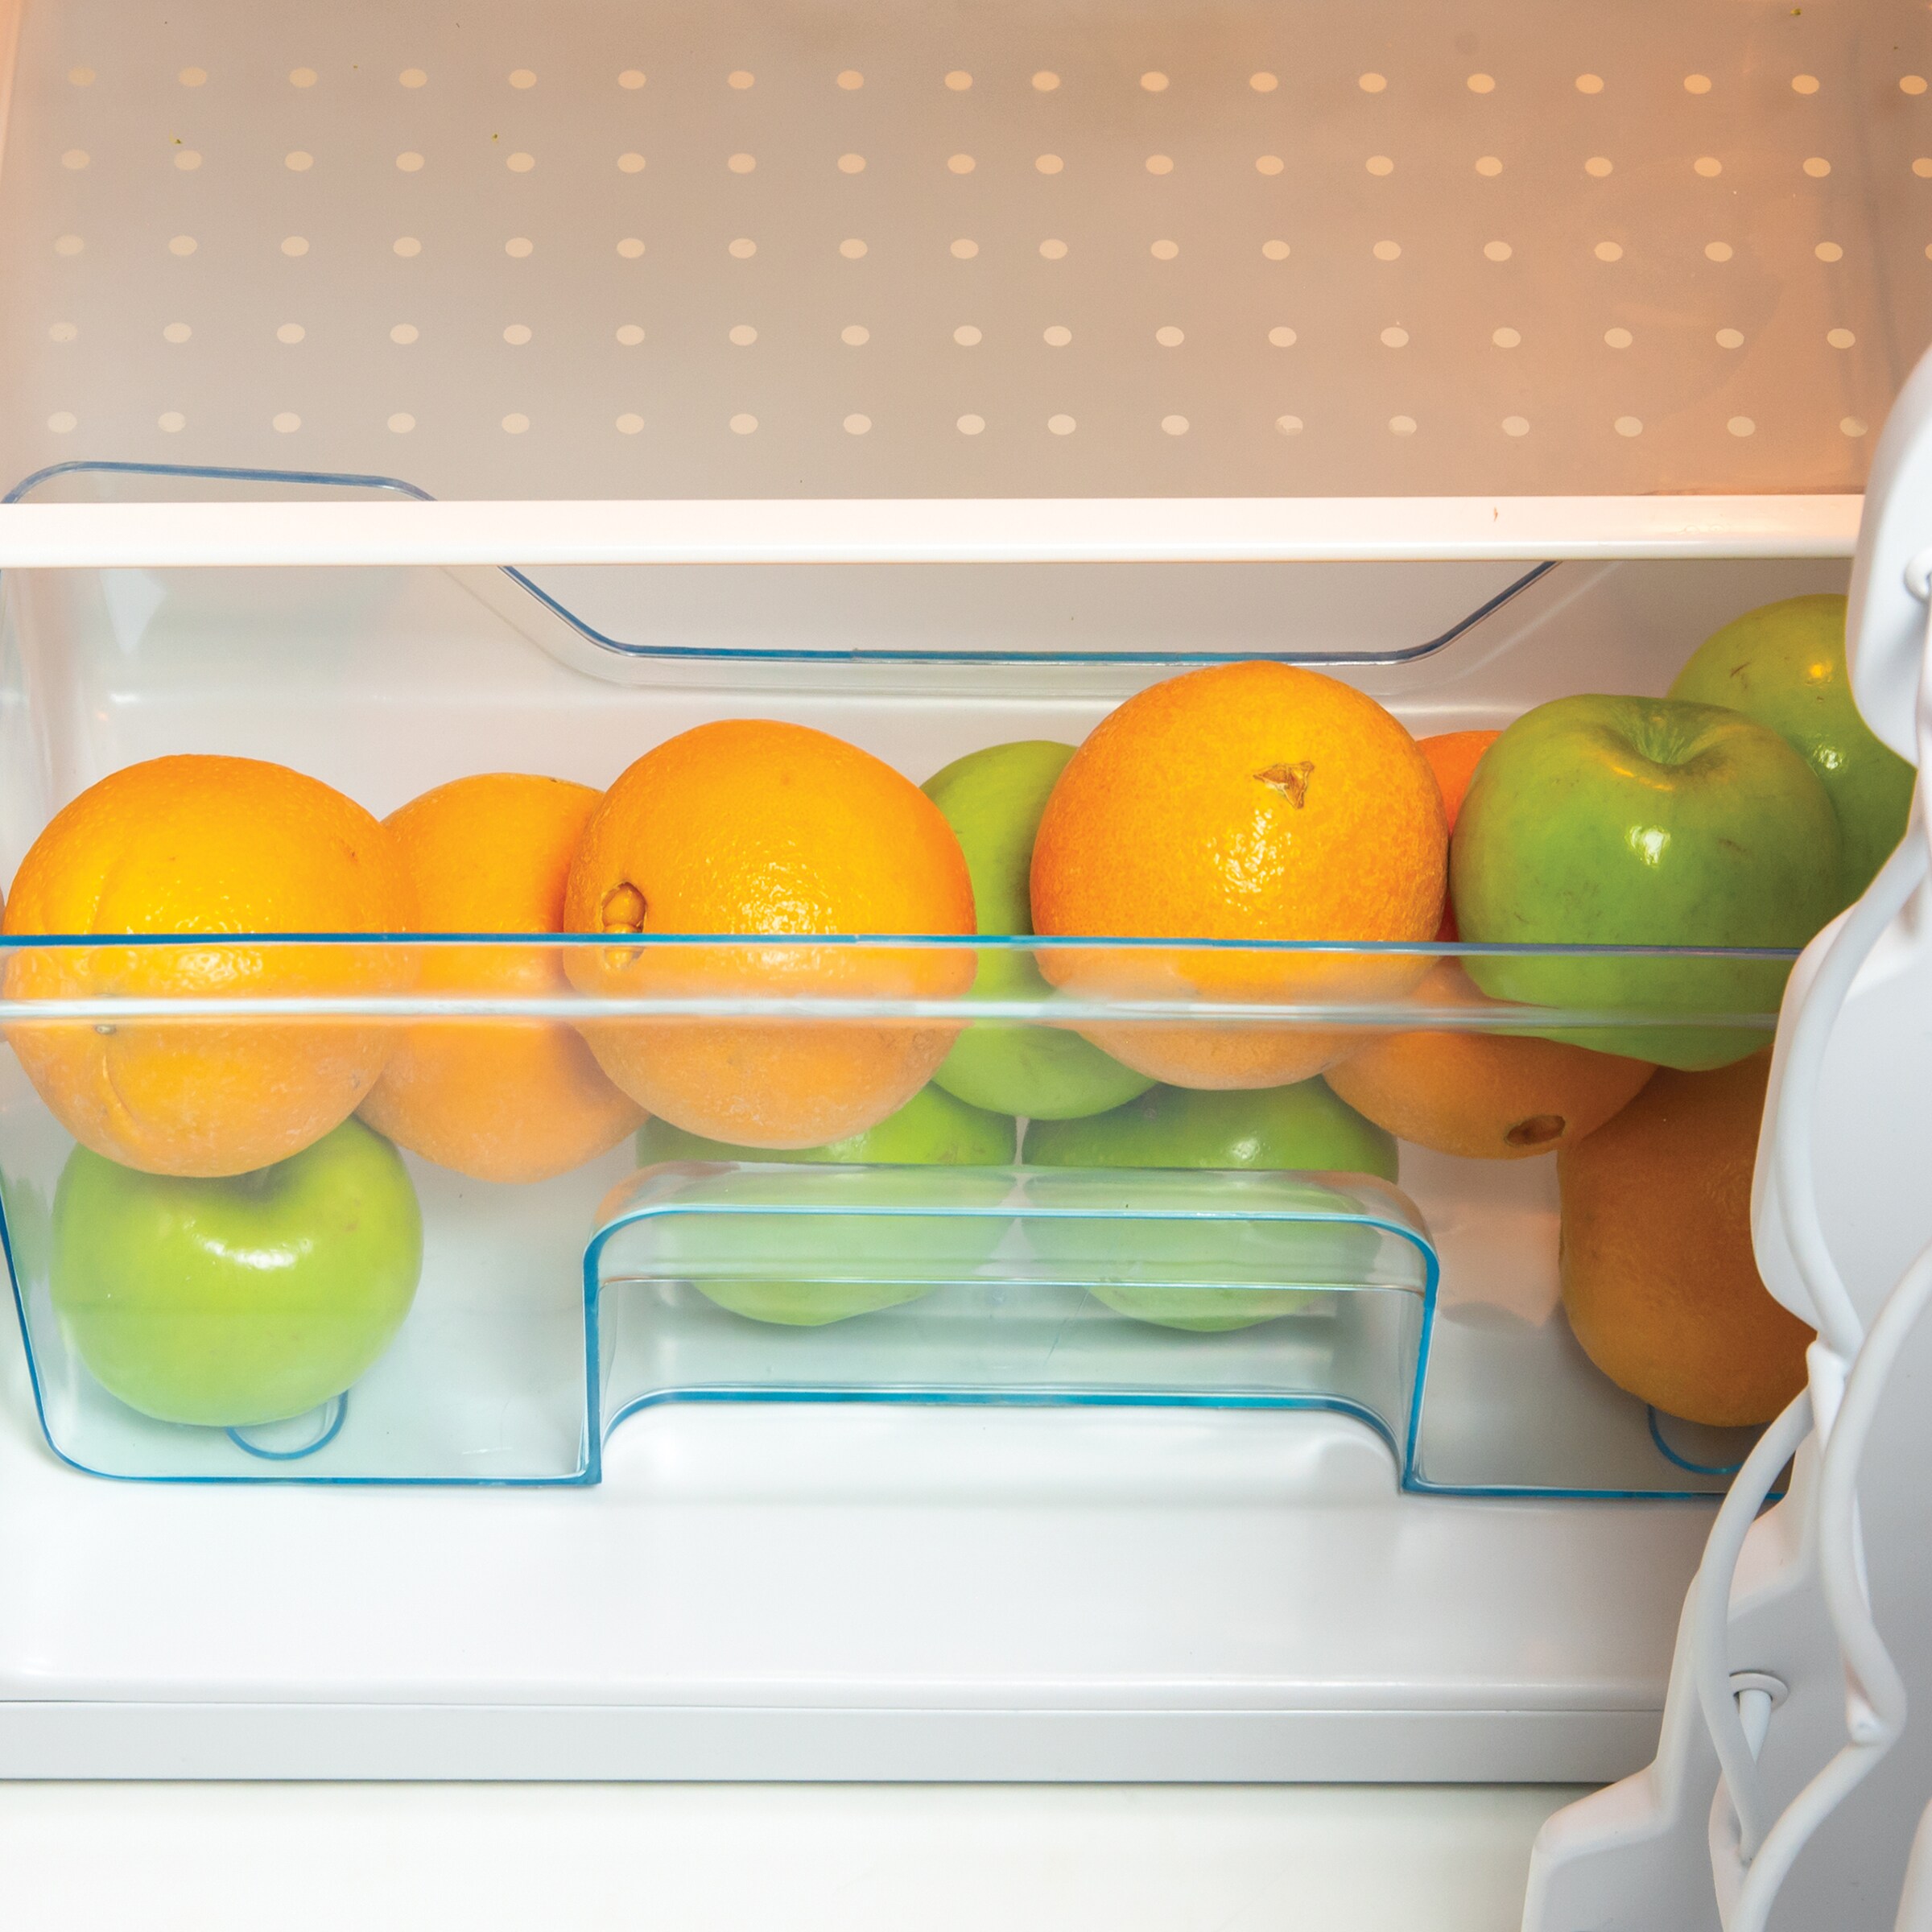 Igloo 3.2-cu ft Top-Freezer Refrigerator (Black) in the Top-Freezer ...